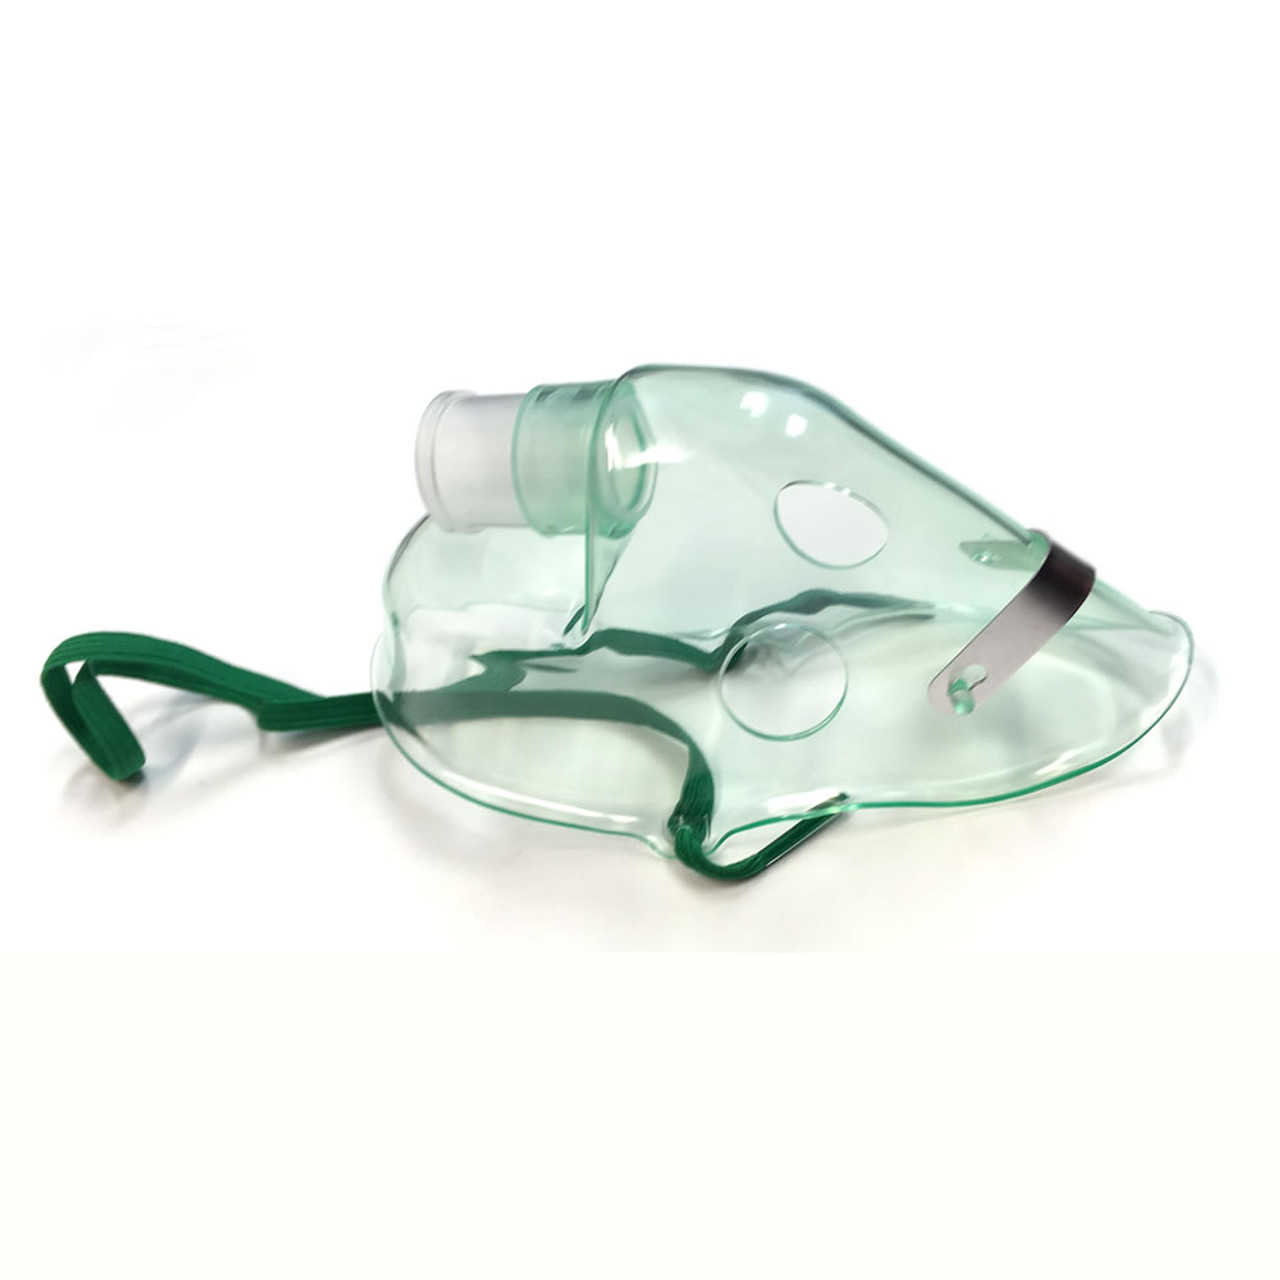 AMG MEDICAL 705-540 MedPro Adult Nebulizer Mask For AMG 705-520 Nebulizer kit, 50/Case